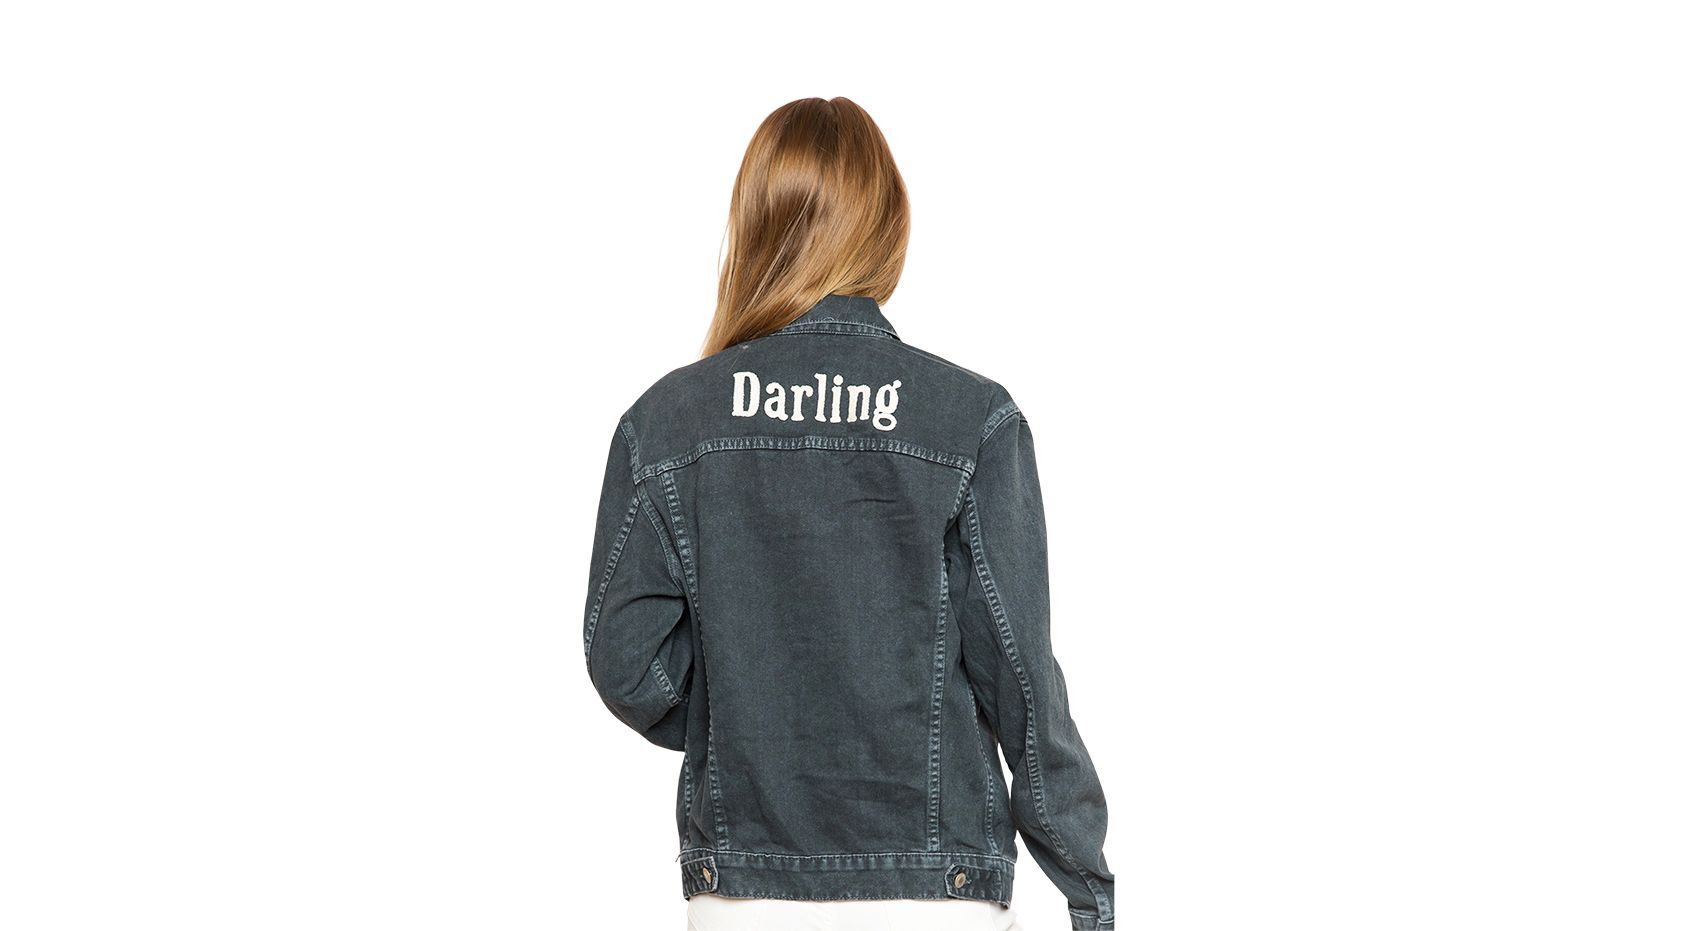 Brandy Melville Amara Darling Jacket